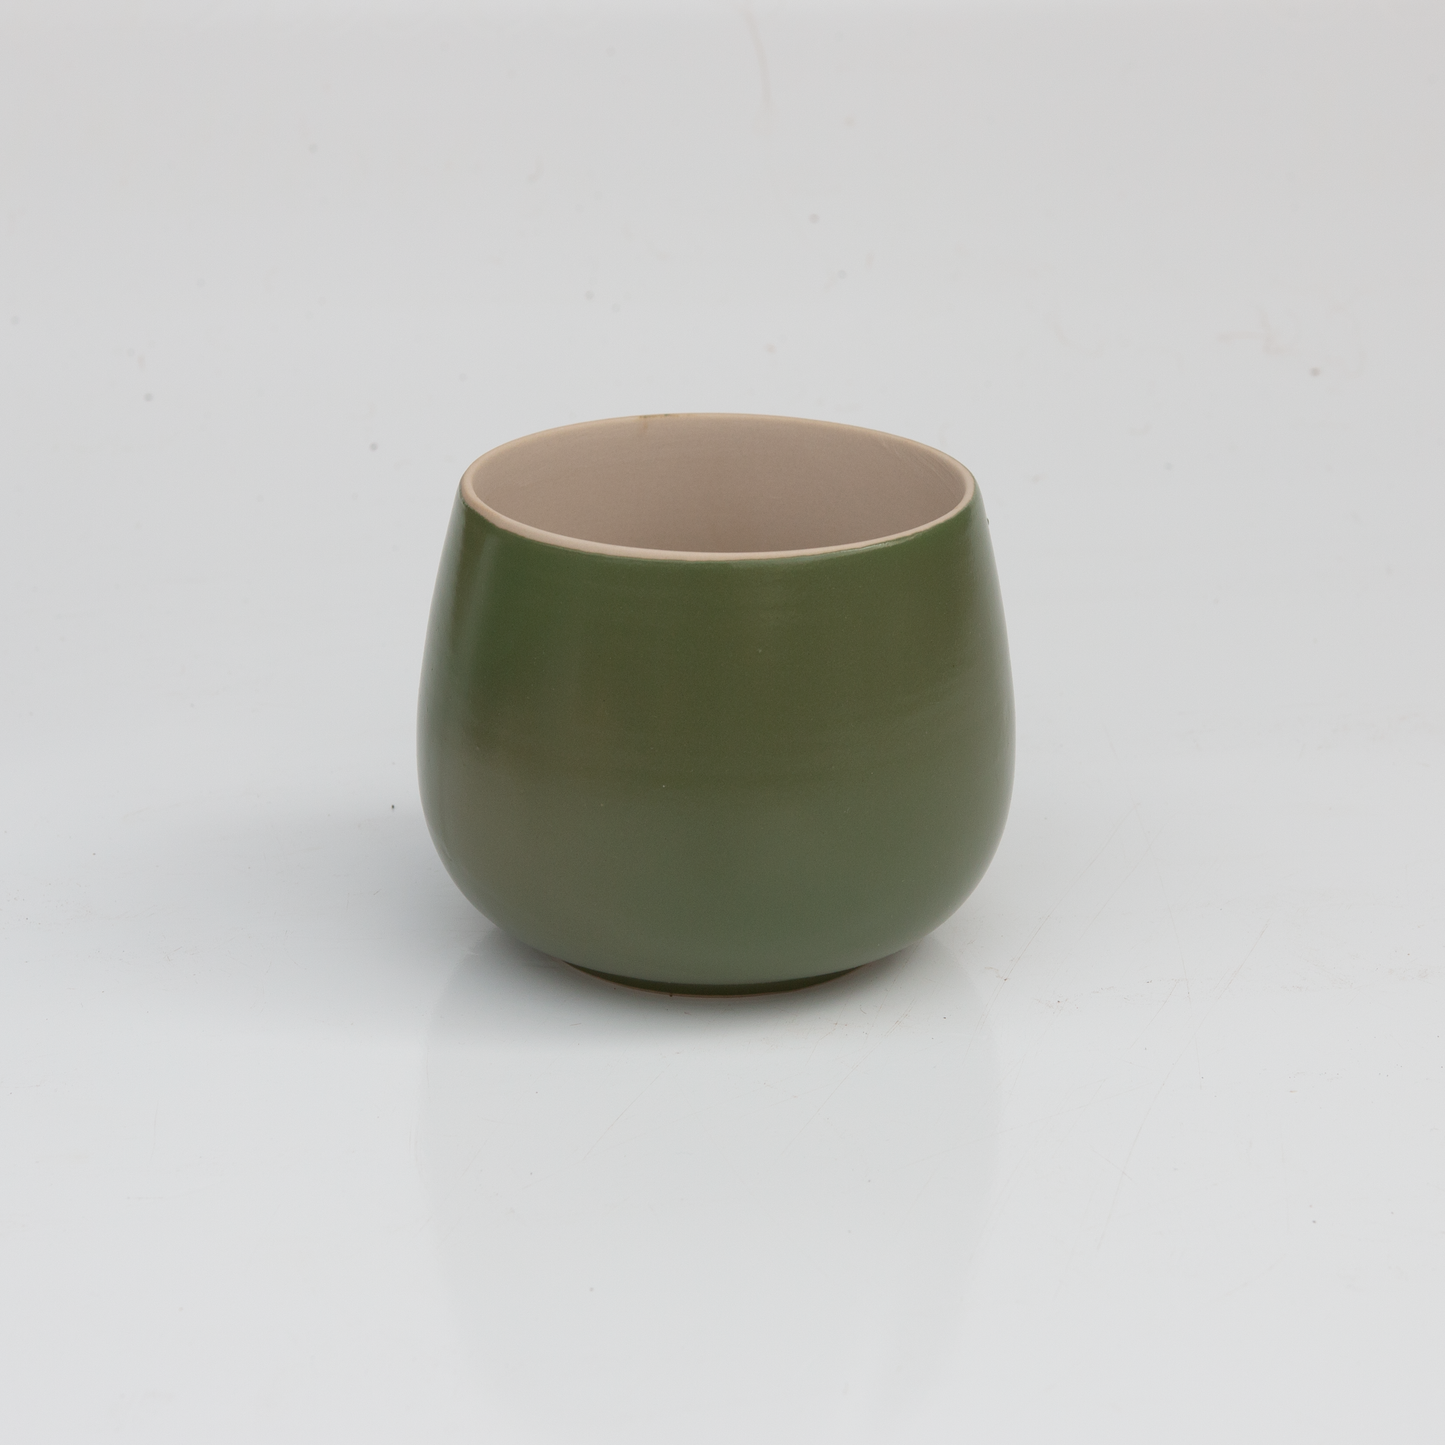 1x Ceramic Pot - Assorted Colours